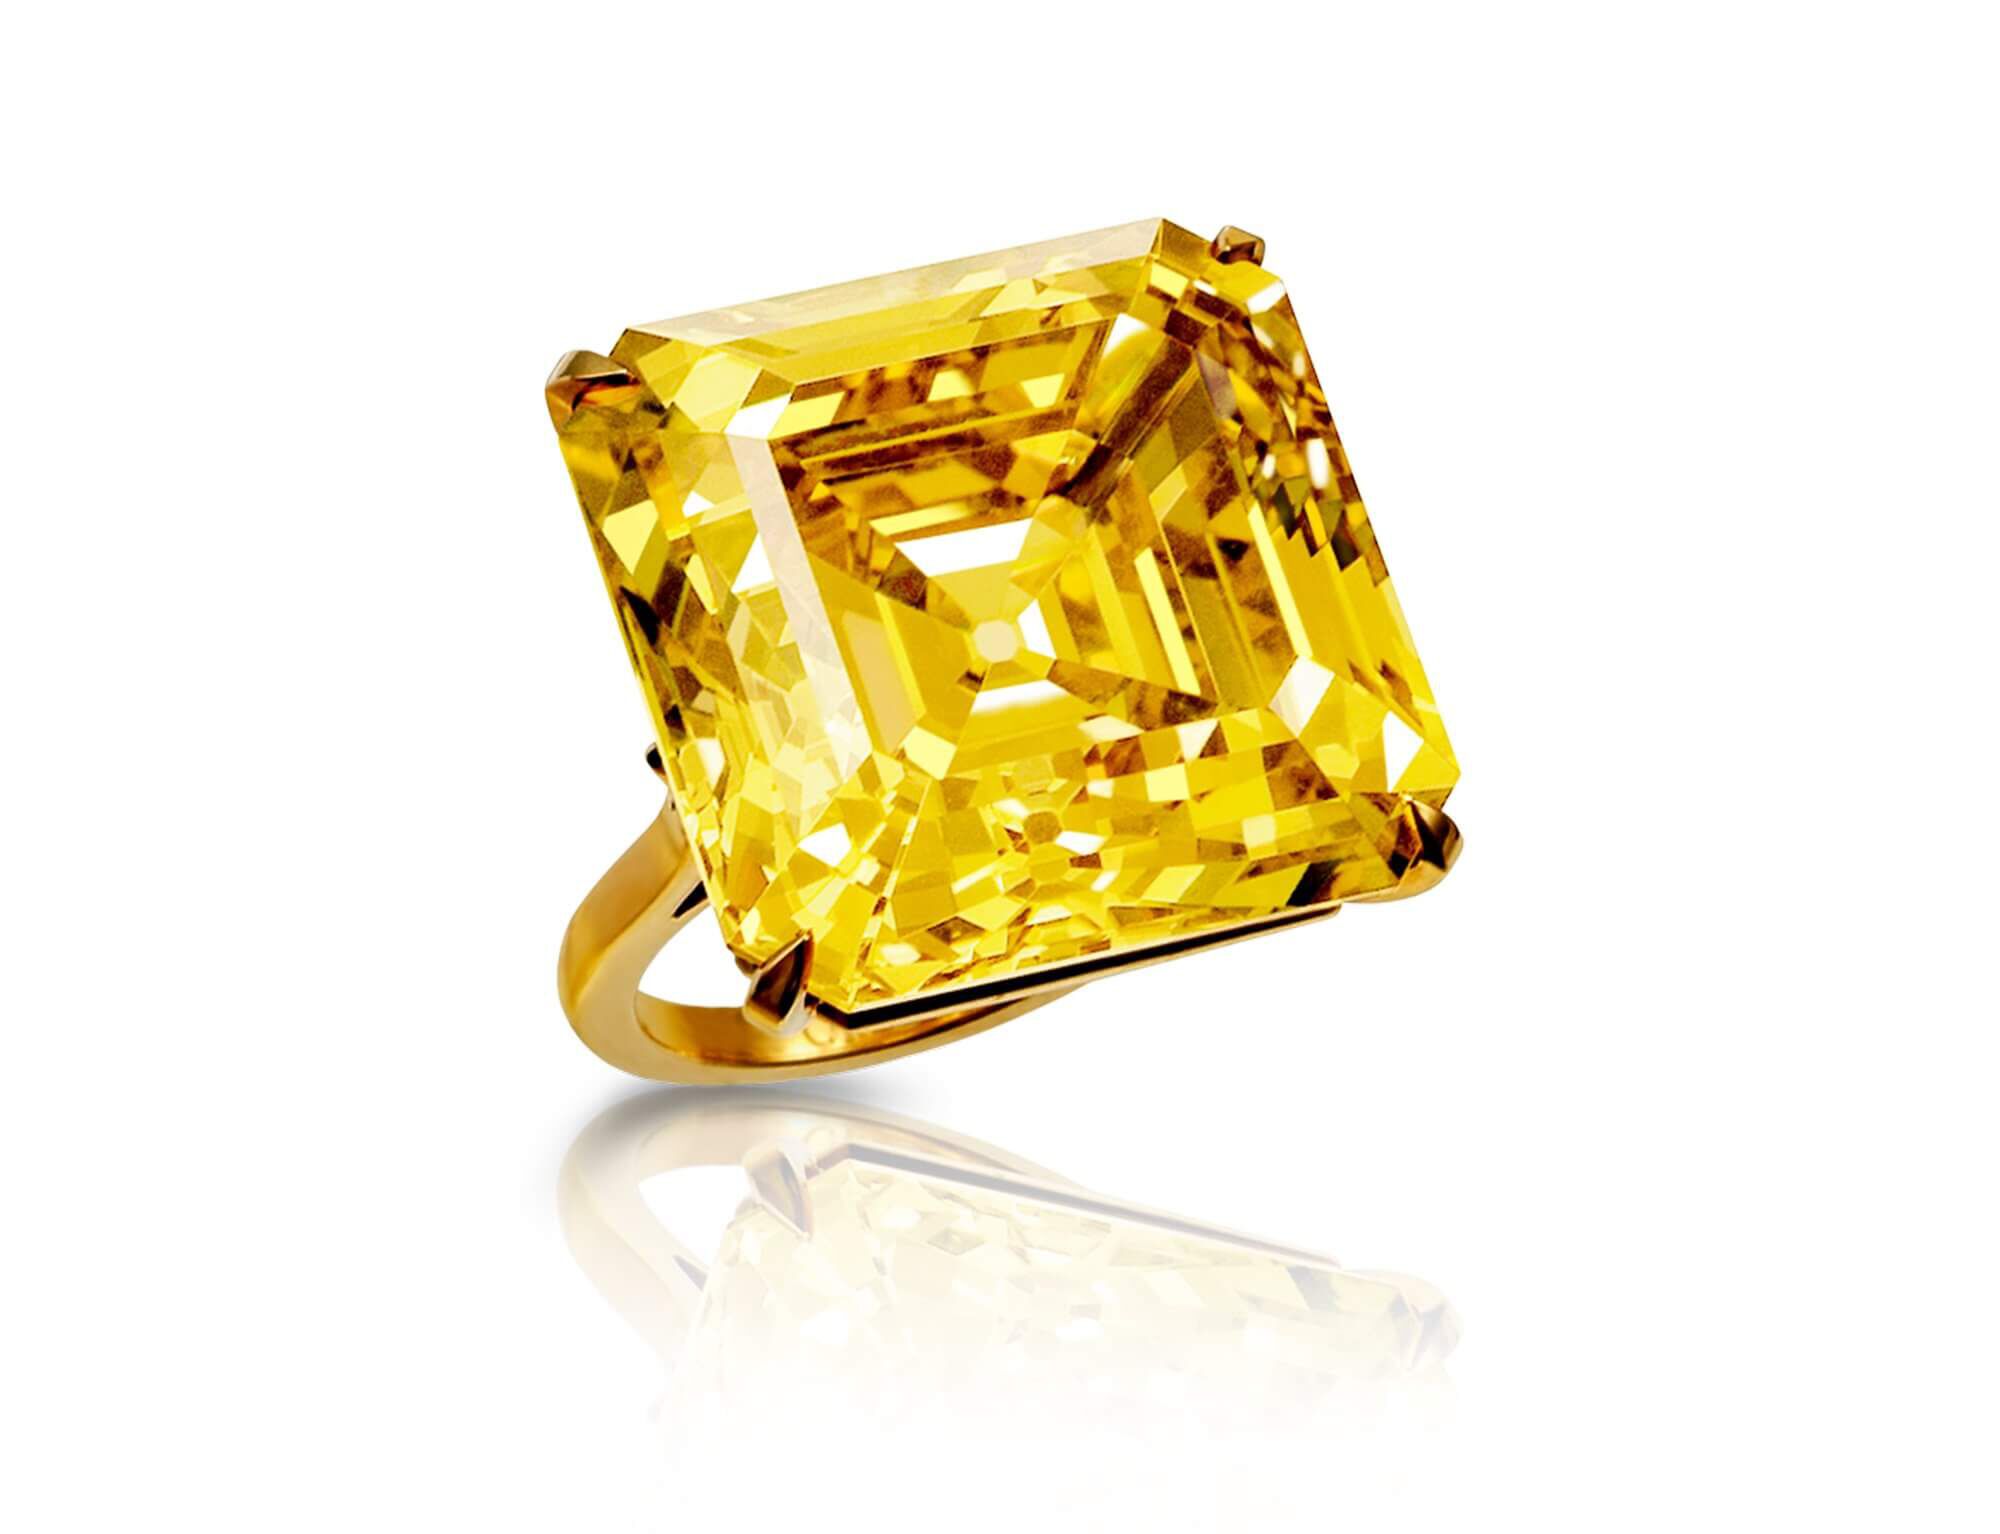 The Graff Star of Bombay- a emerald cut yellow diamond ring